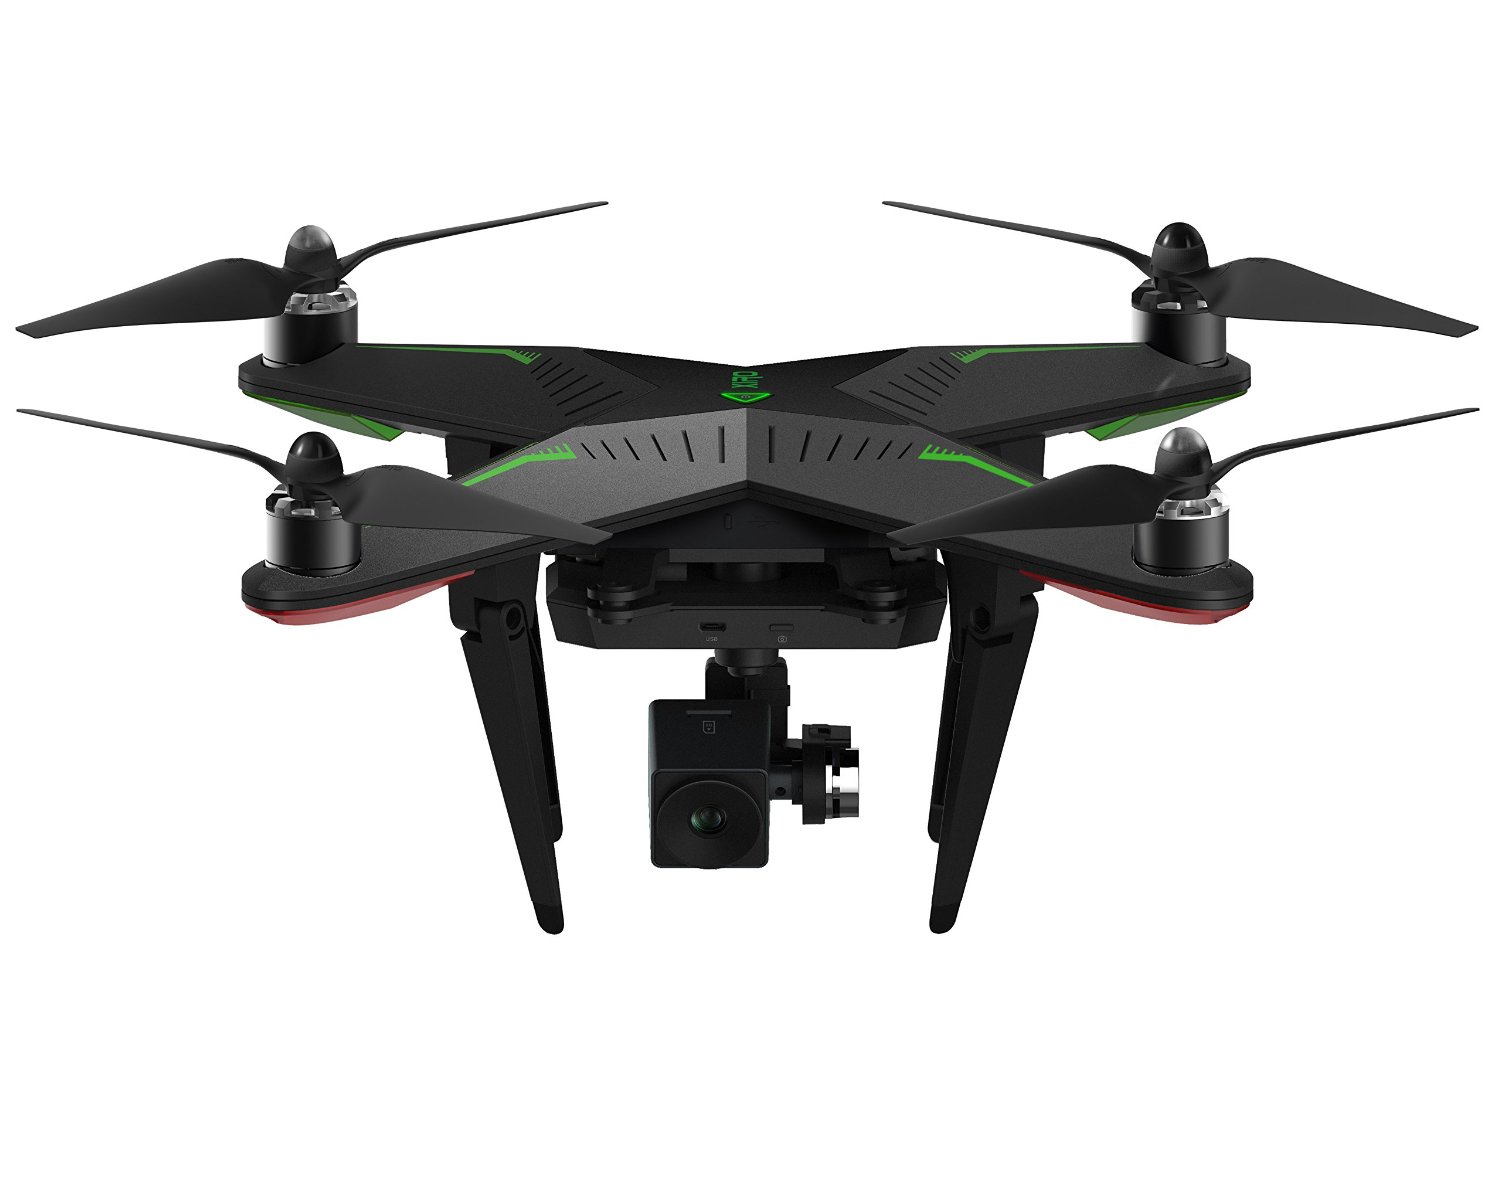 XIRO Xplorer V Drone - Harga dan Spesifikasi